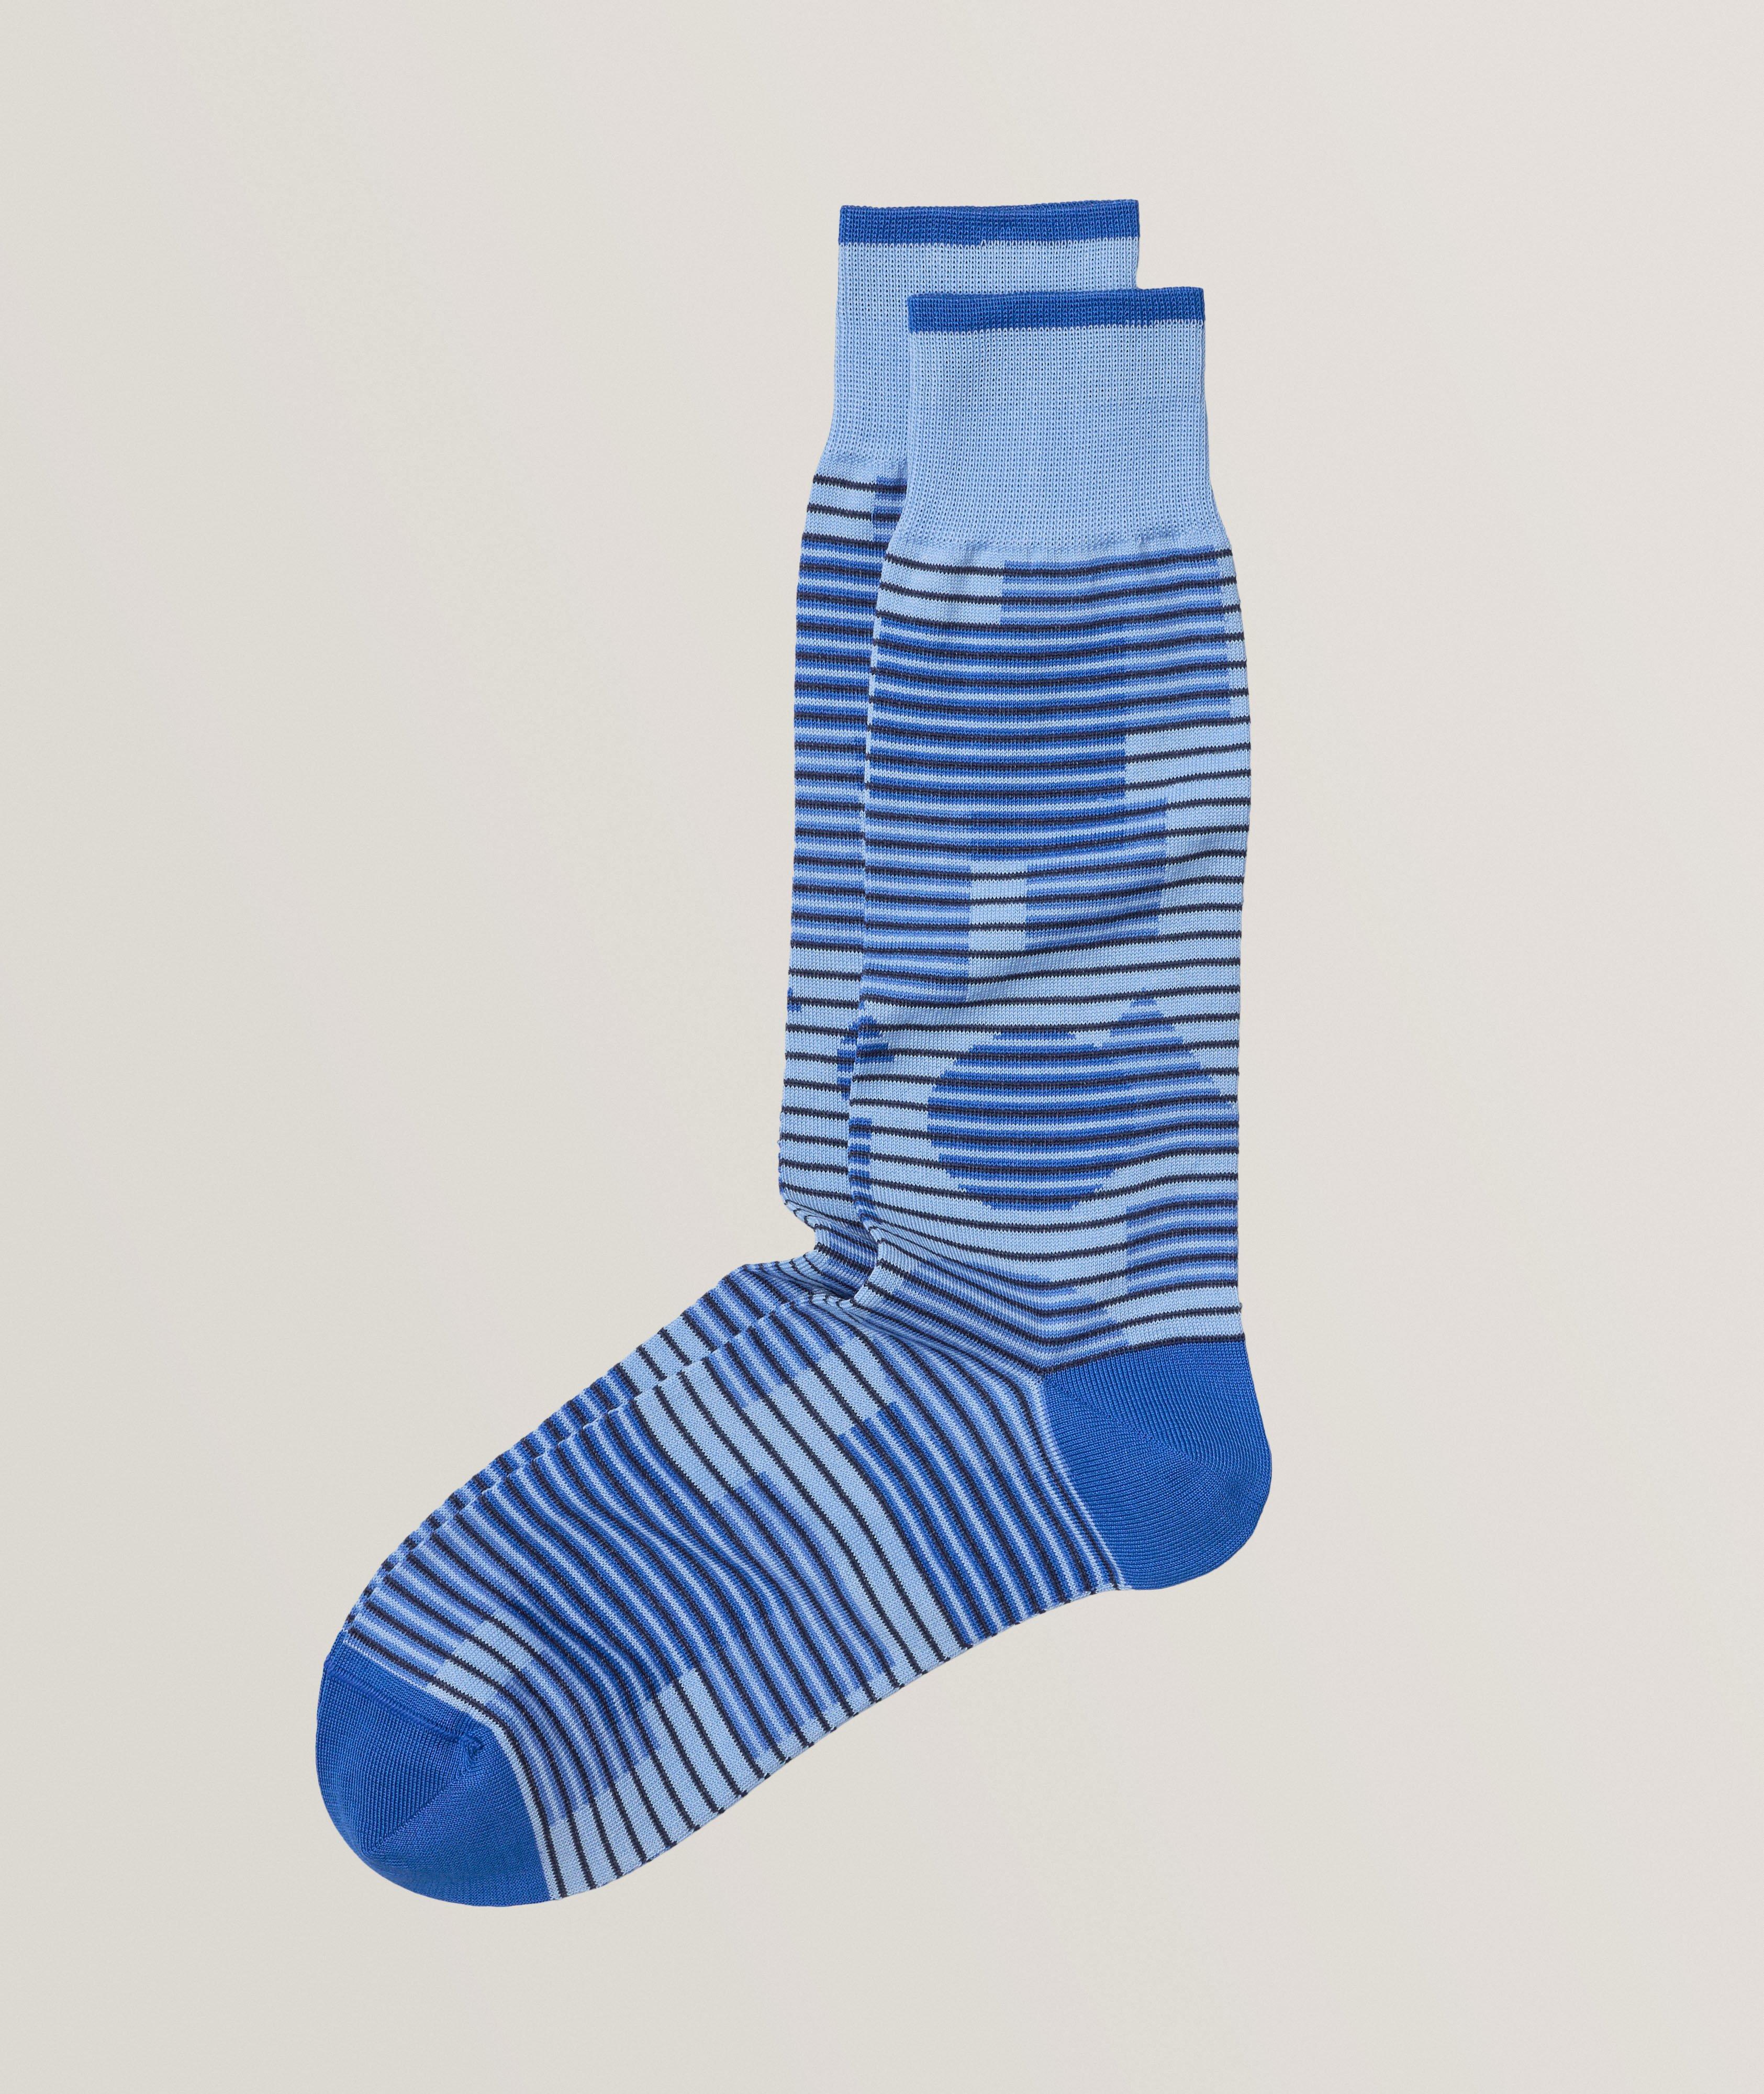 Geometric Striped Stretch-Mercerized Cotton Blend Socks image 0